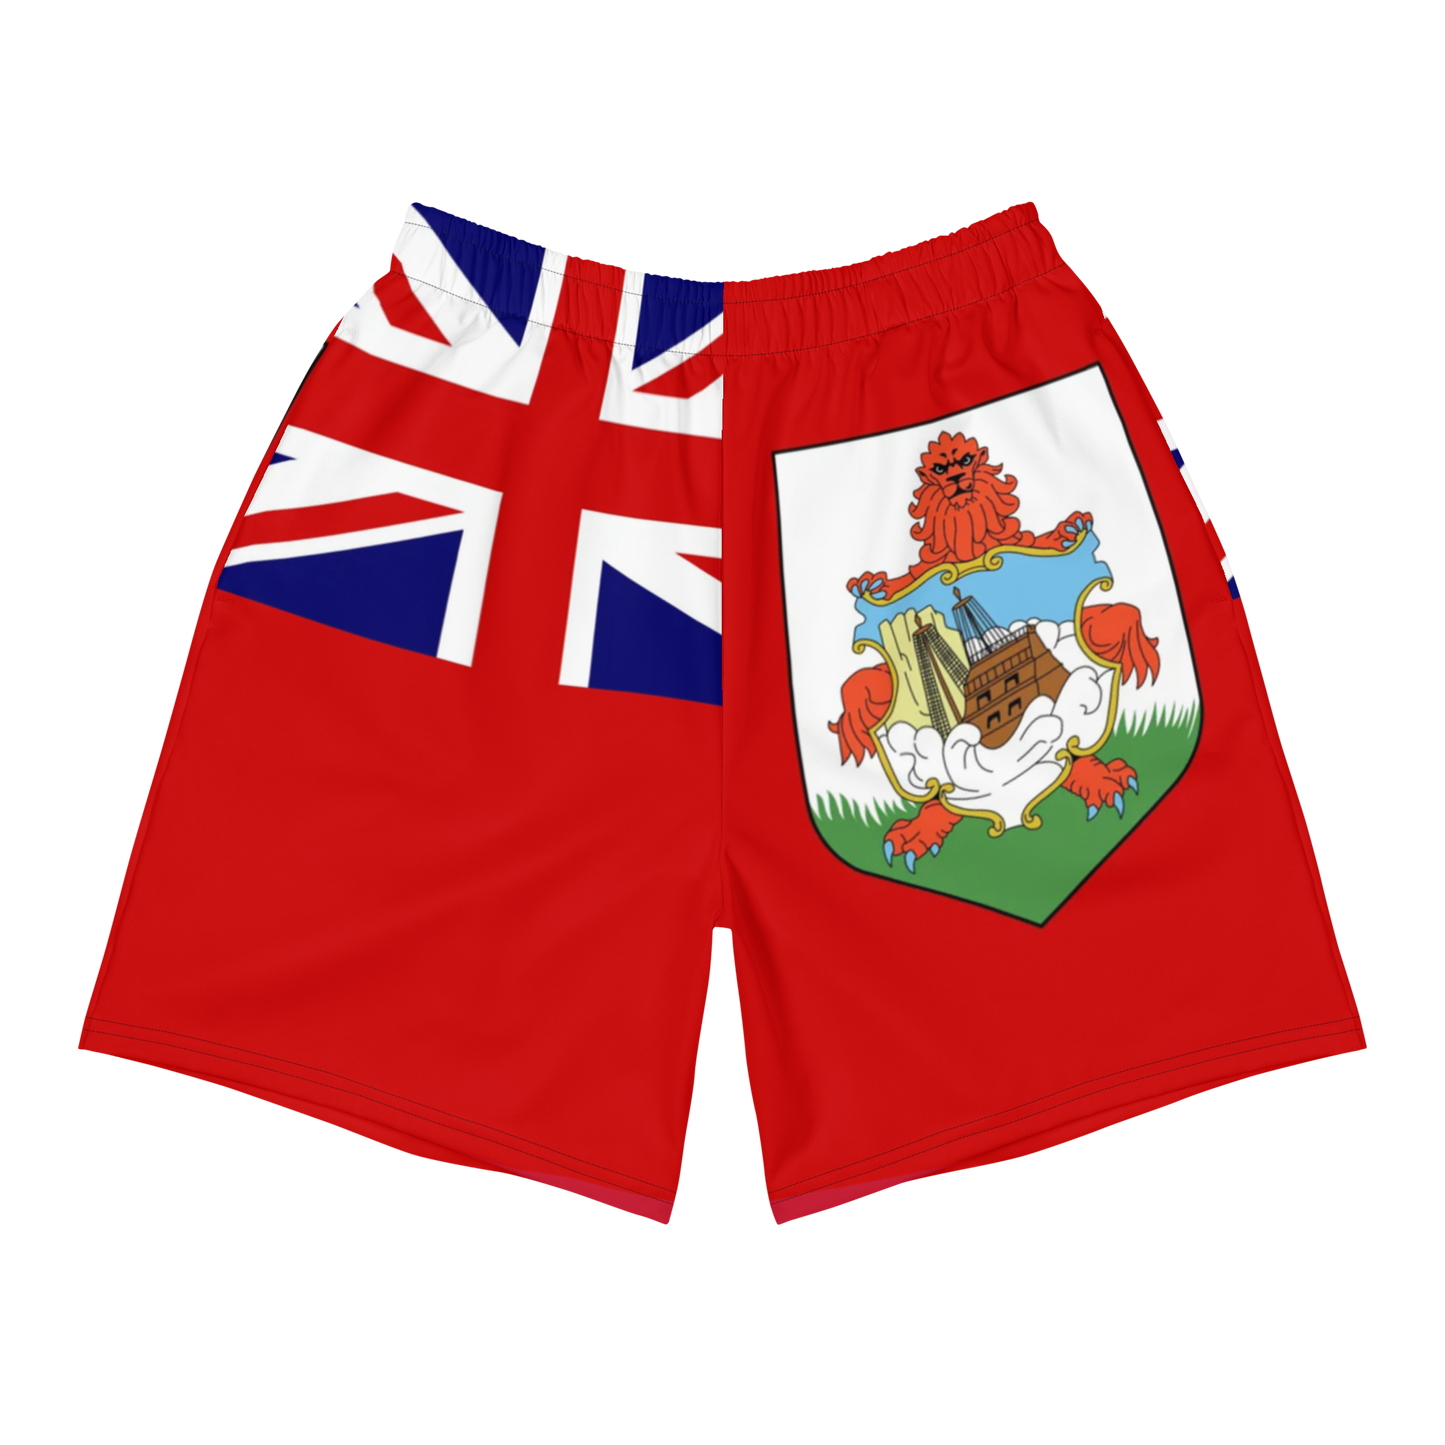 Bermuda Men's Athletic Shorts